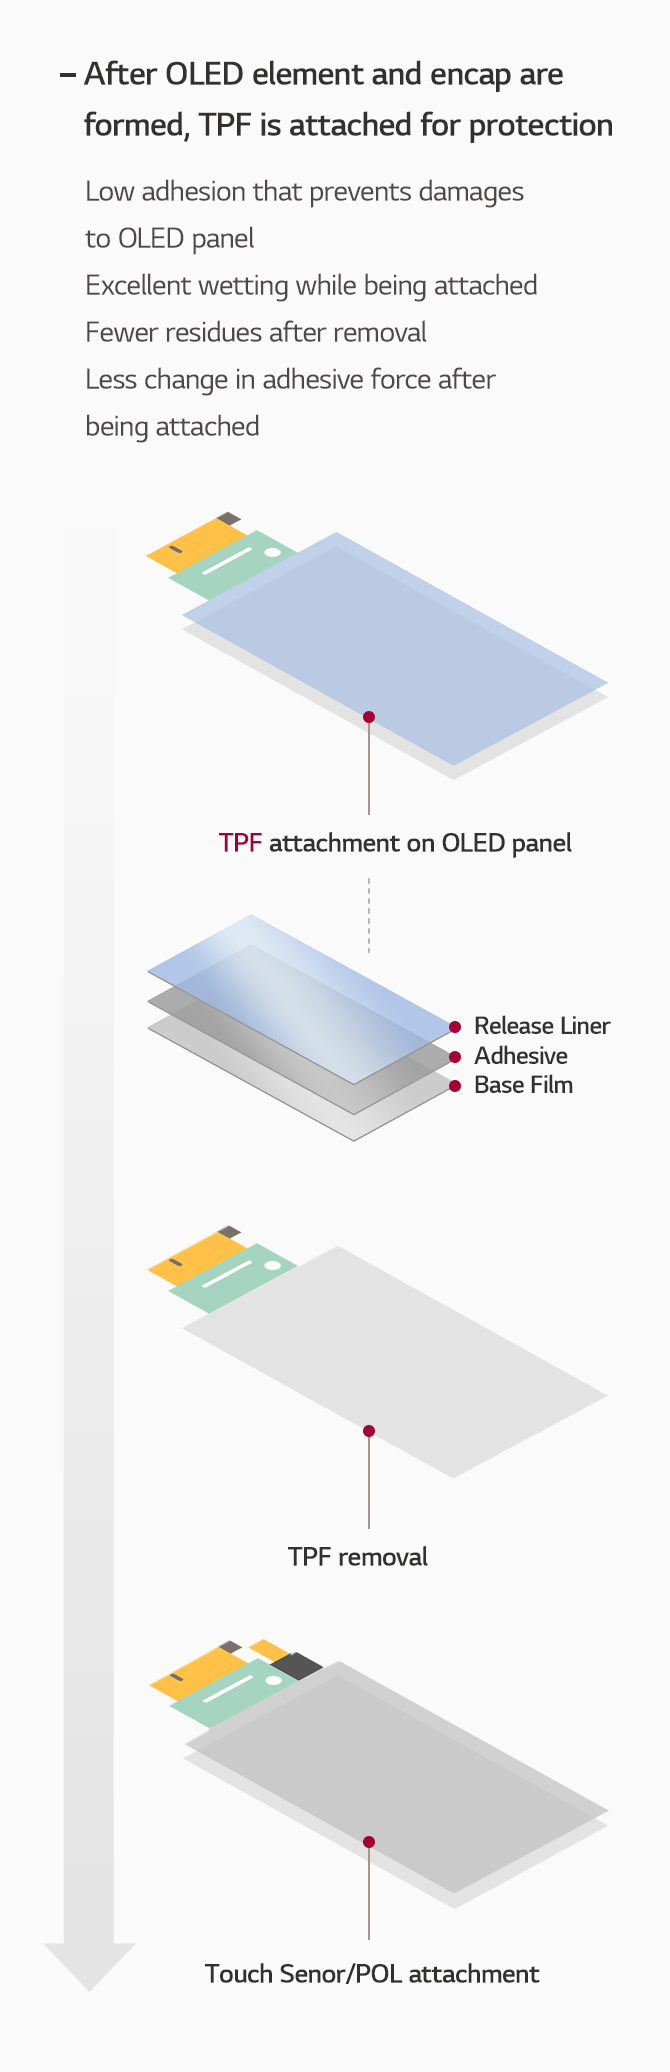 OLED 패널에 TPF 부착 (OLED 소자 및 봉지(Encap)형성 후, TPF를 부착함으로써 보호), 다음단계로 TPF 제거, 다음 단계로 터치 센서 또는 편광판을 부착TPF 구조 : 제일 하단부터 Base Film - Adhesive - Release Flim